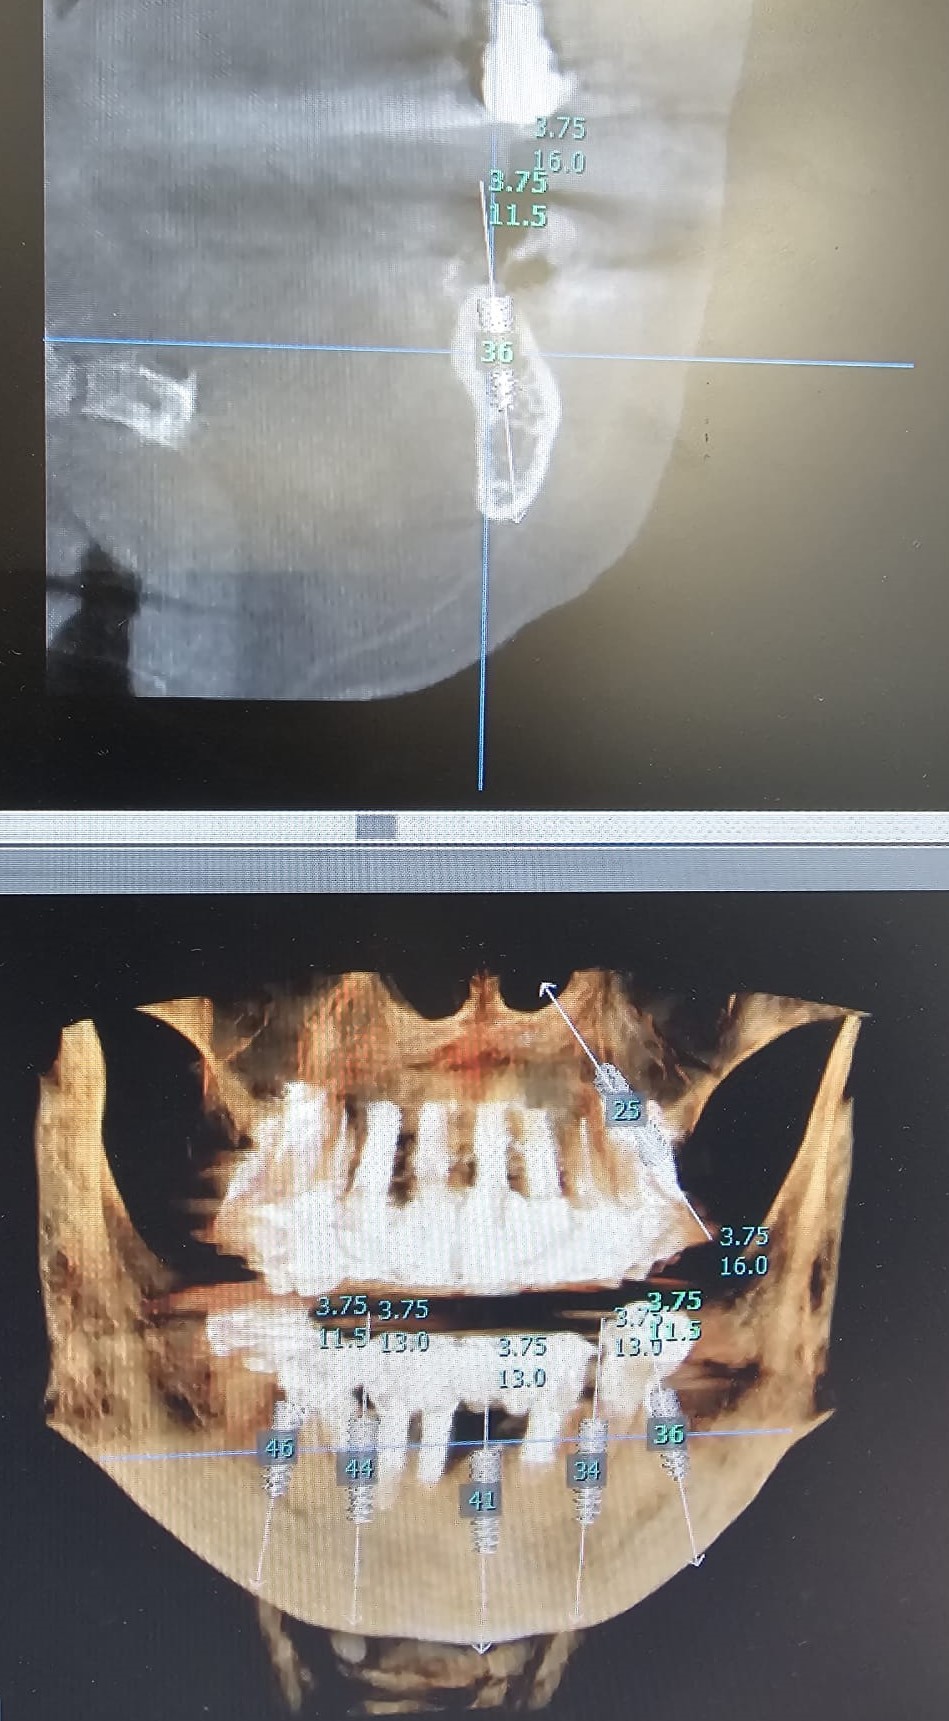 כיצד מתבצע הליך ציפוי שיניים - צילום דיגיטלי - דר אלכסנדר